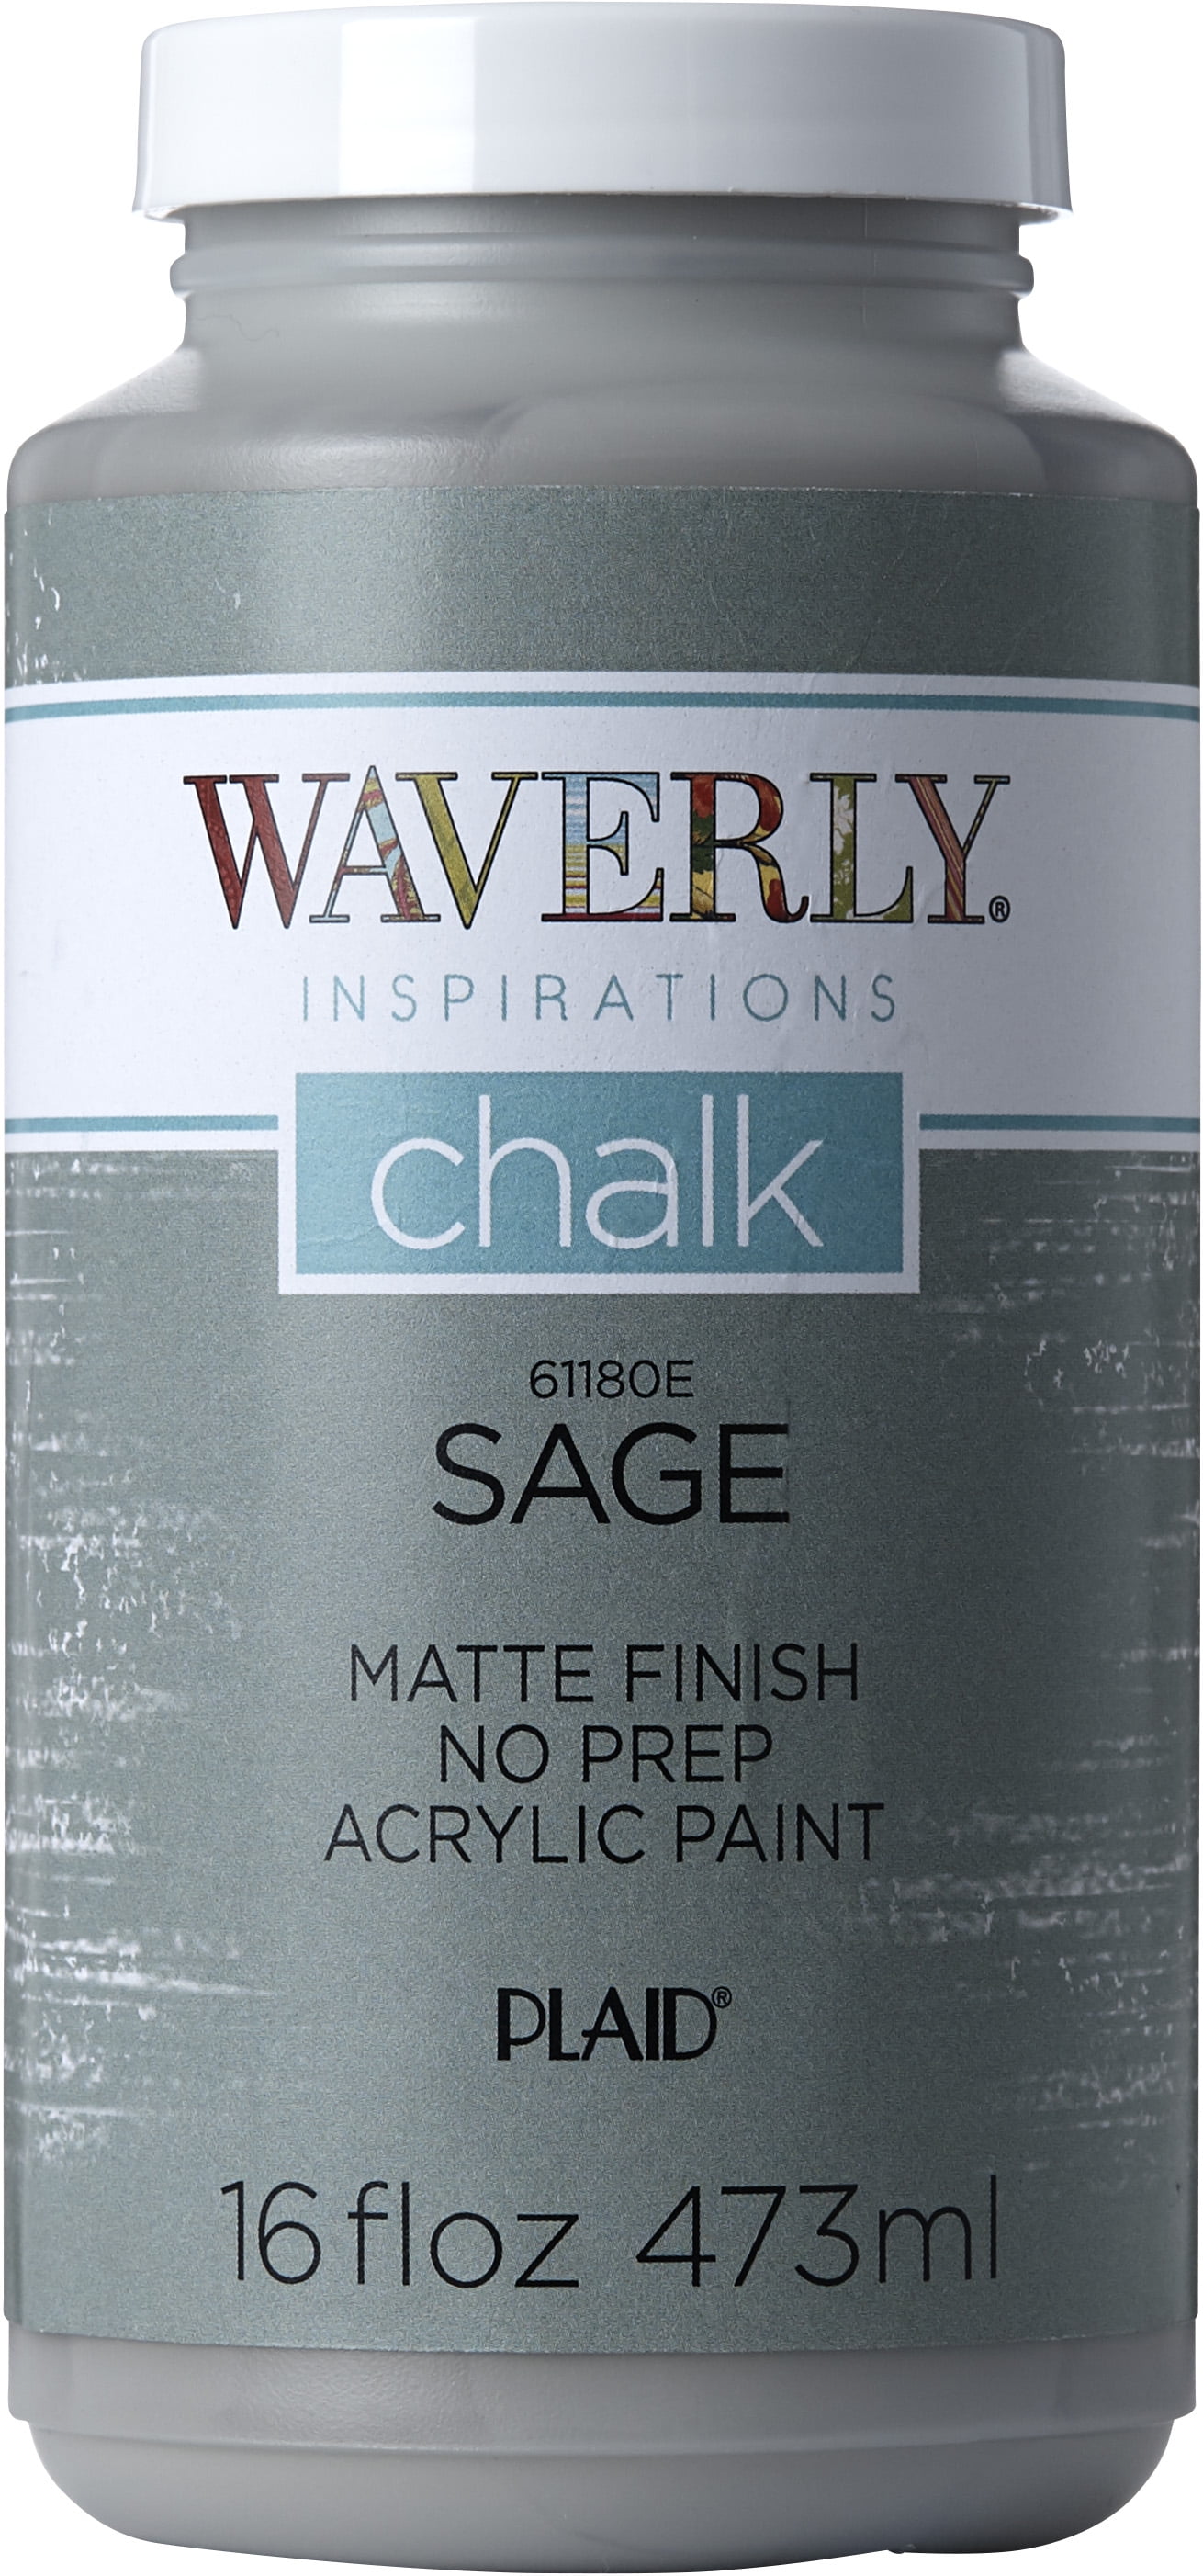 Waverly Inspirations 60734E Chalk Paint, Matte, Antique Wax Brown, 2 Fl. Oz.